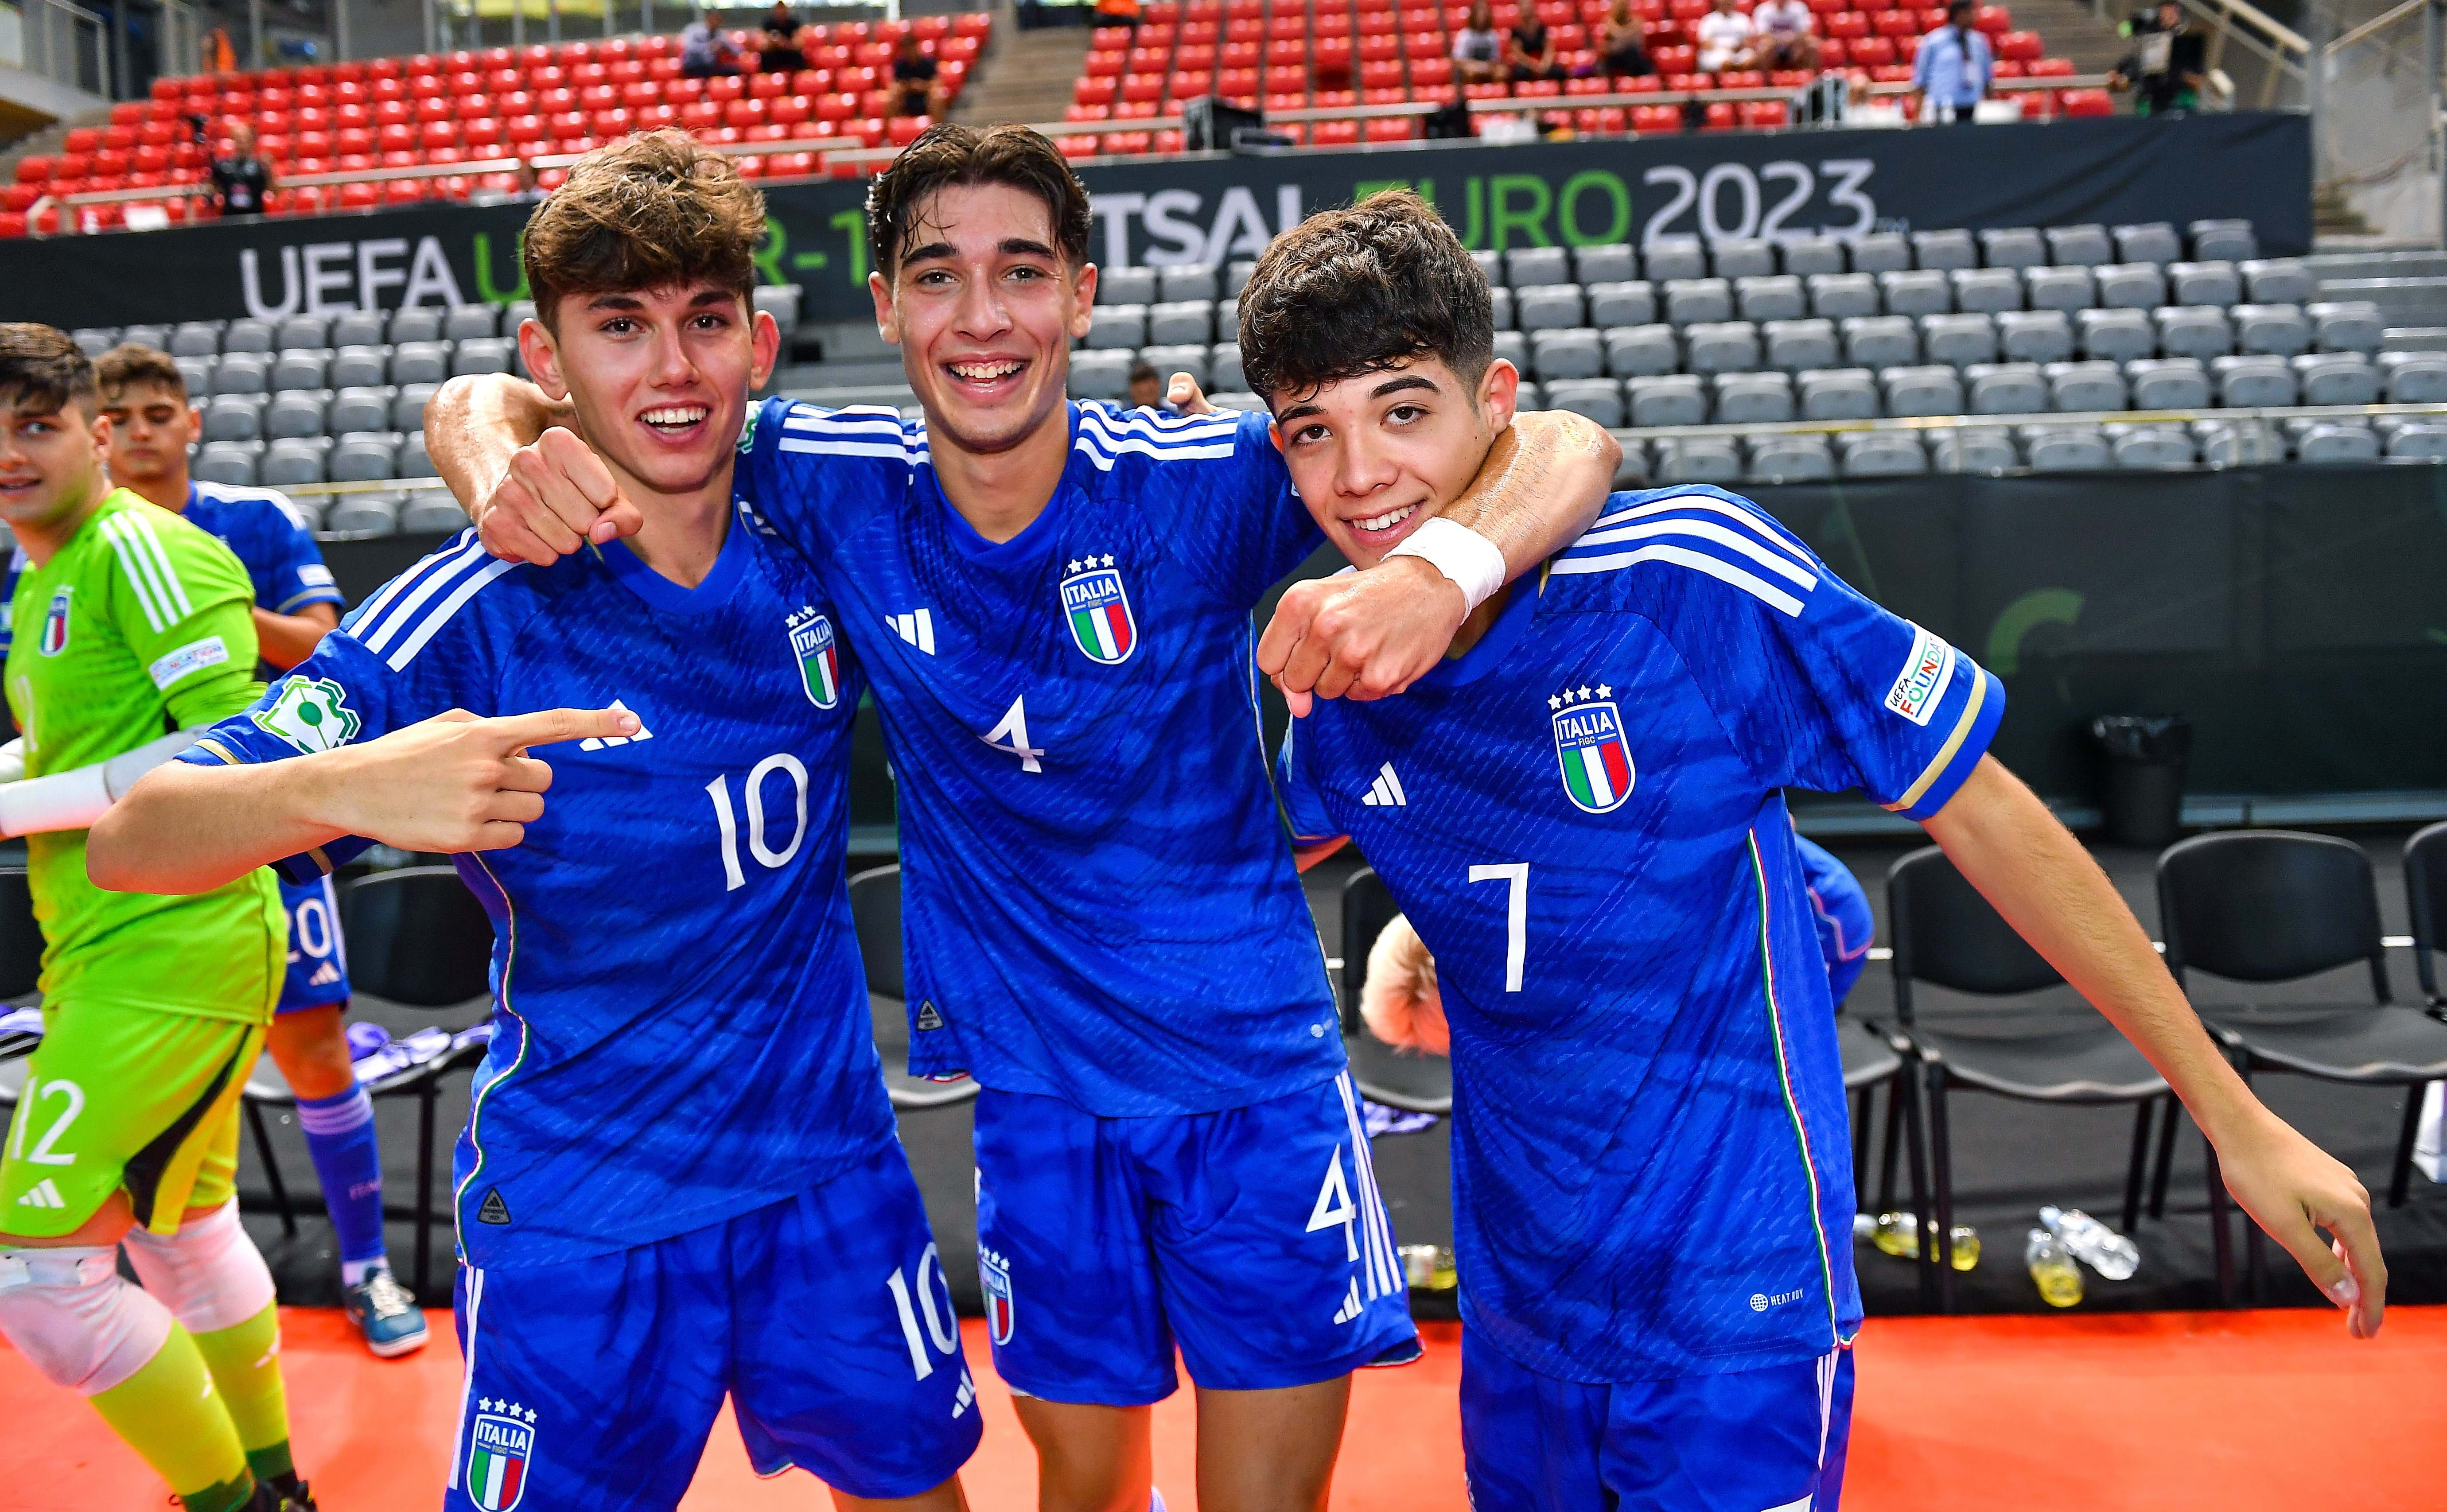 Italia-Finlandia 5-0, UEFA Under 19 Futsal Euro 2023